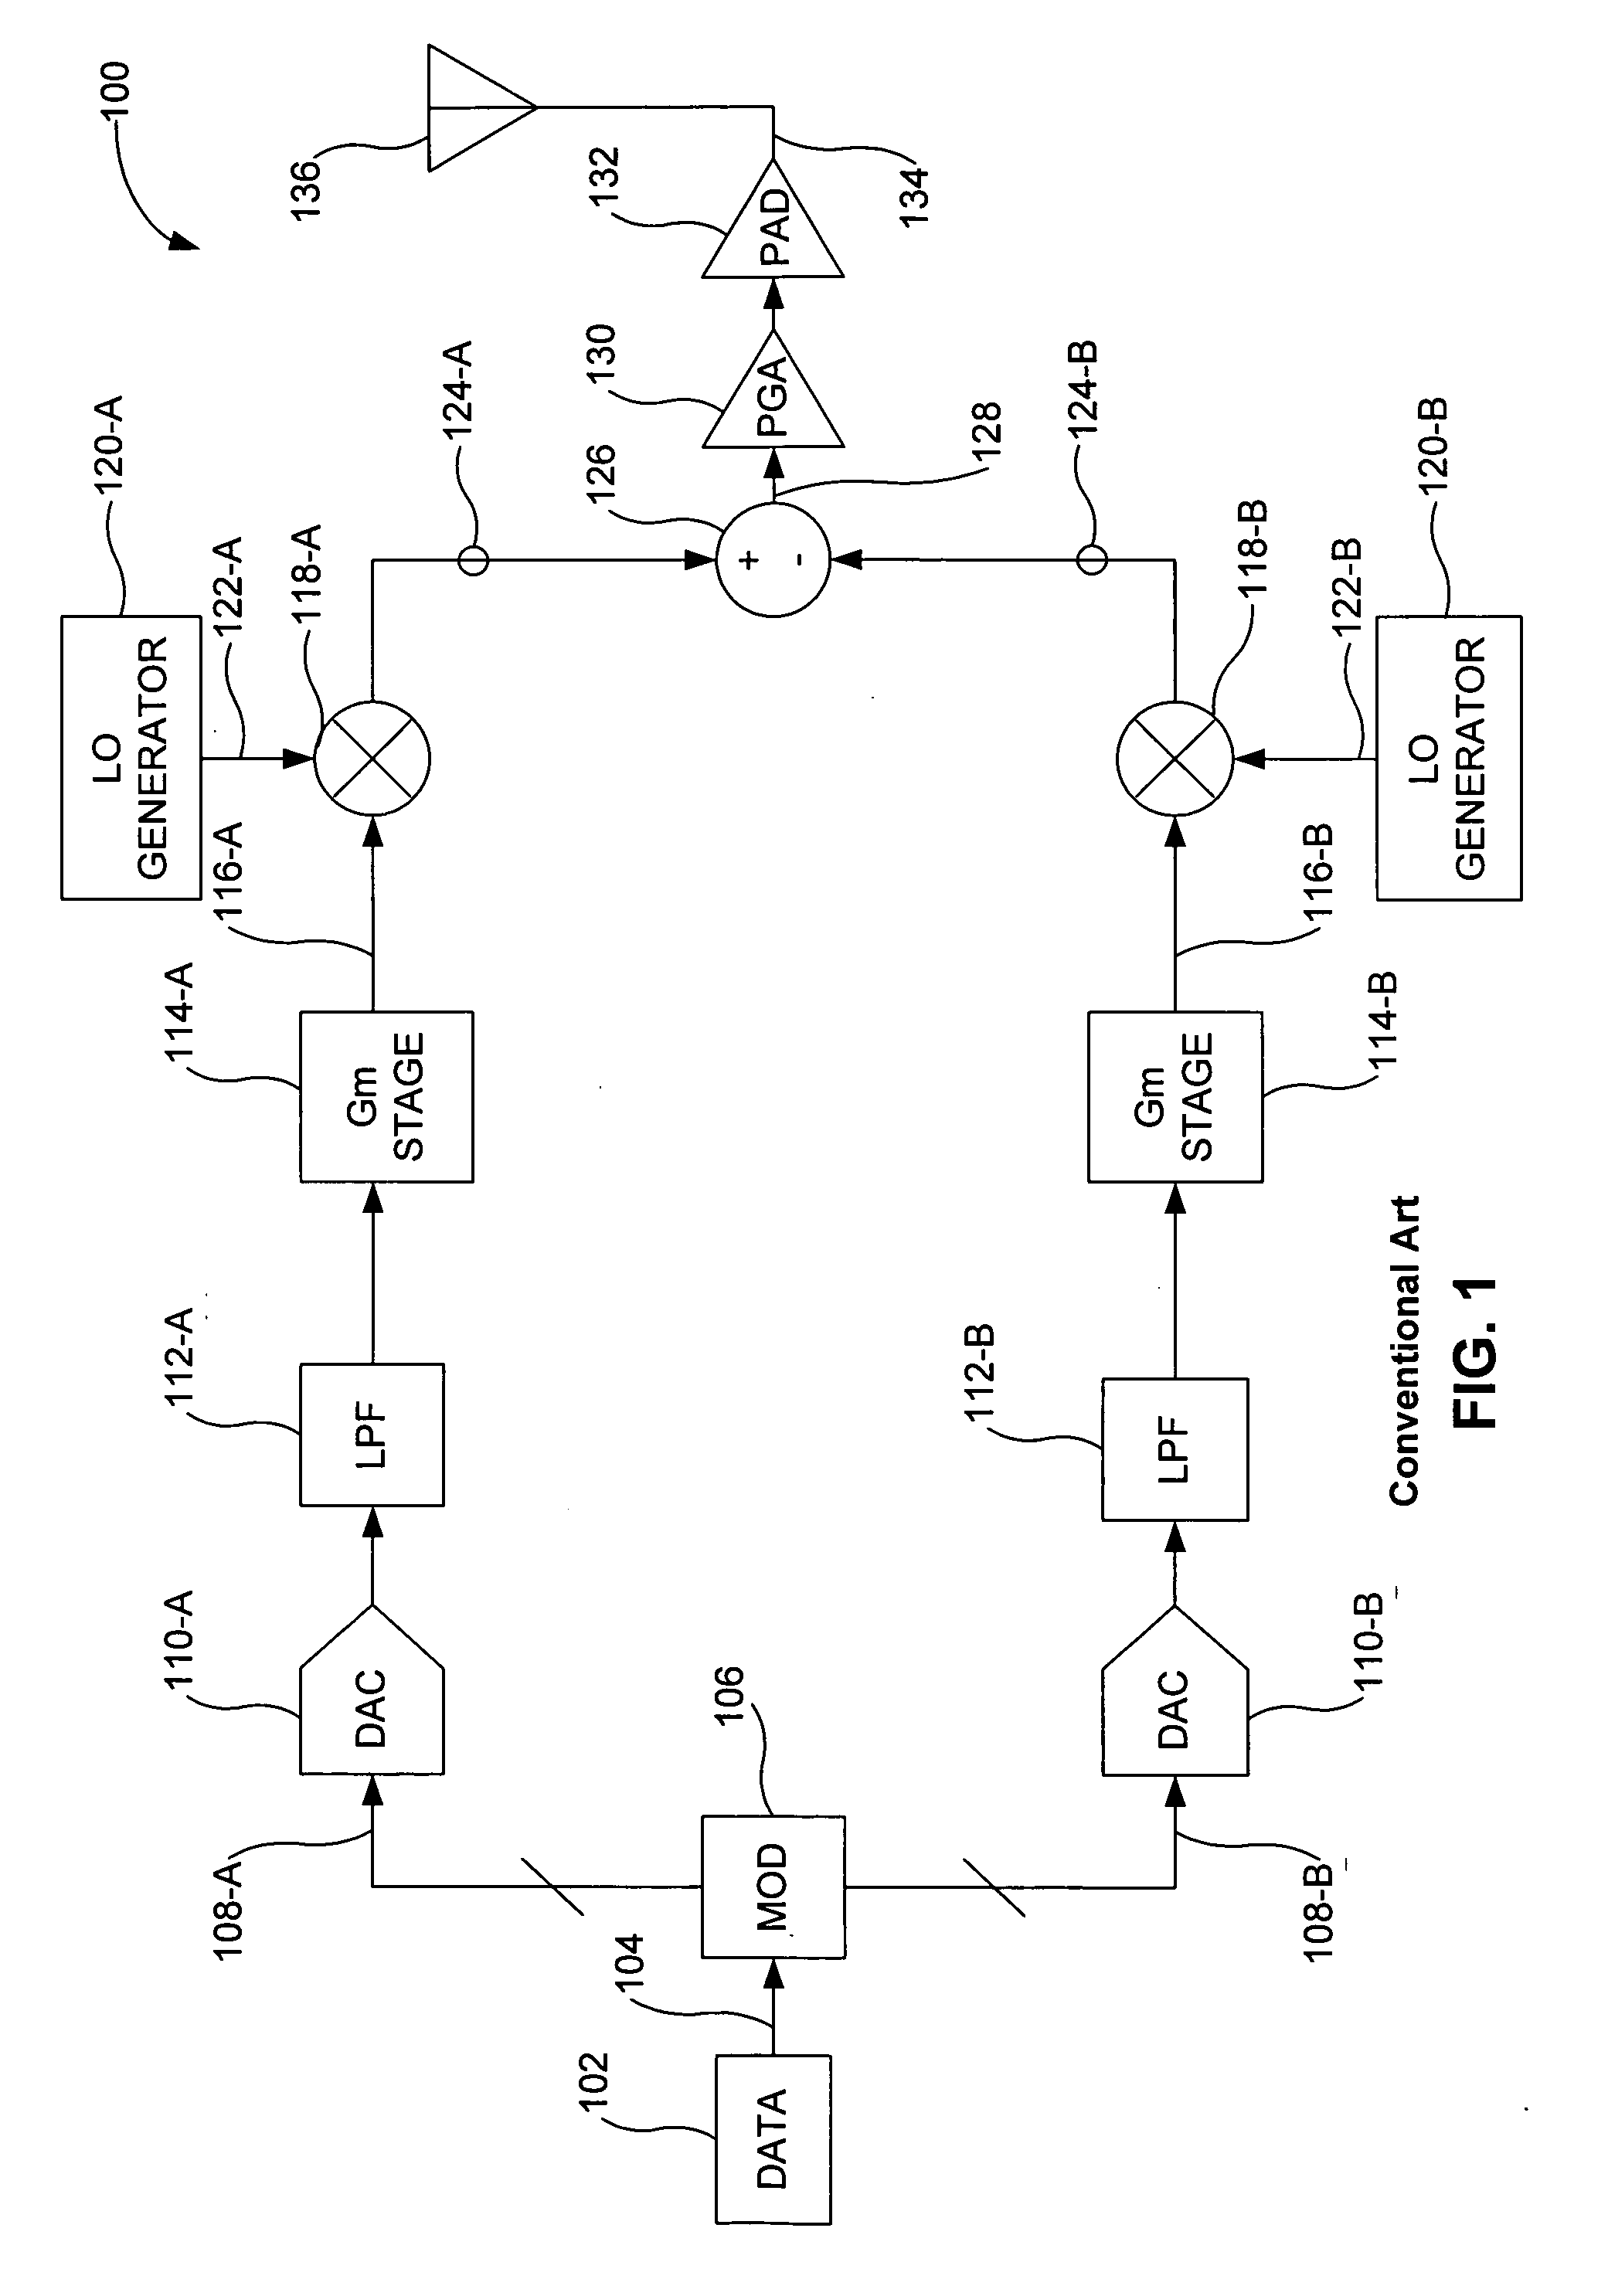 Apparatus and method of local oscillator leakage cancellation